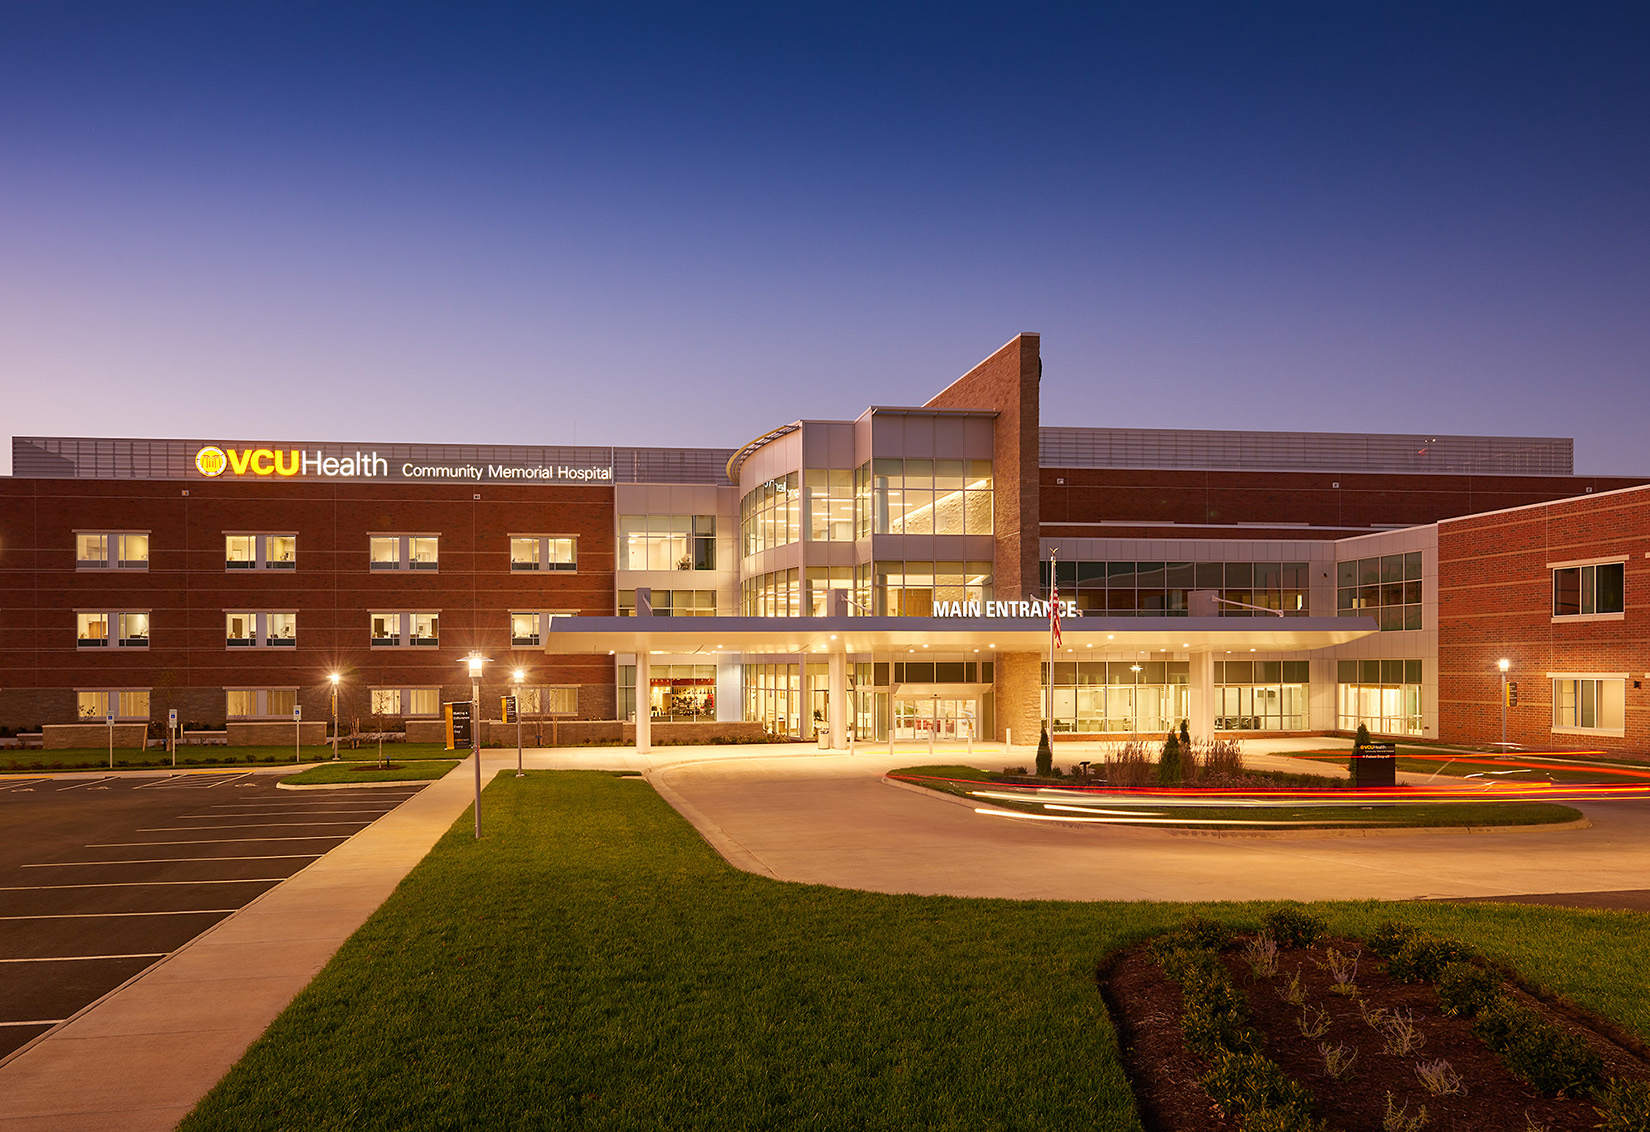 View of VCU Health Community Memorial Hospital's main entrance at dusk